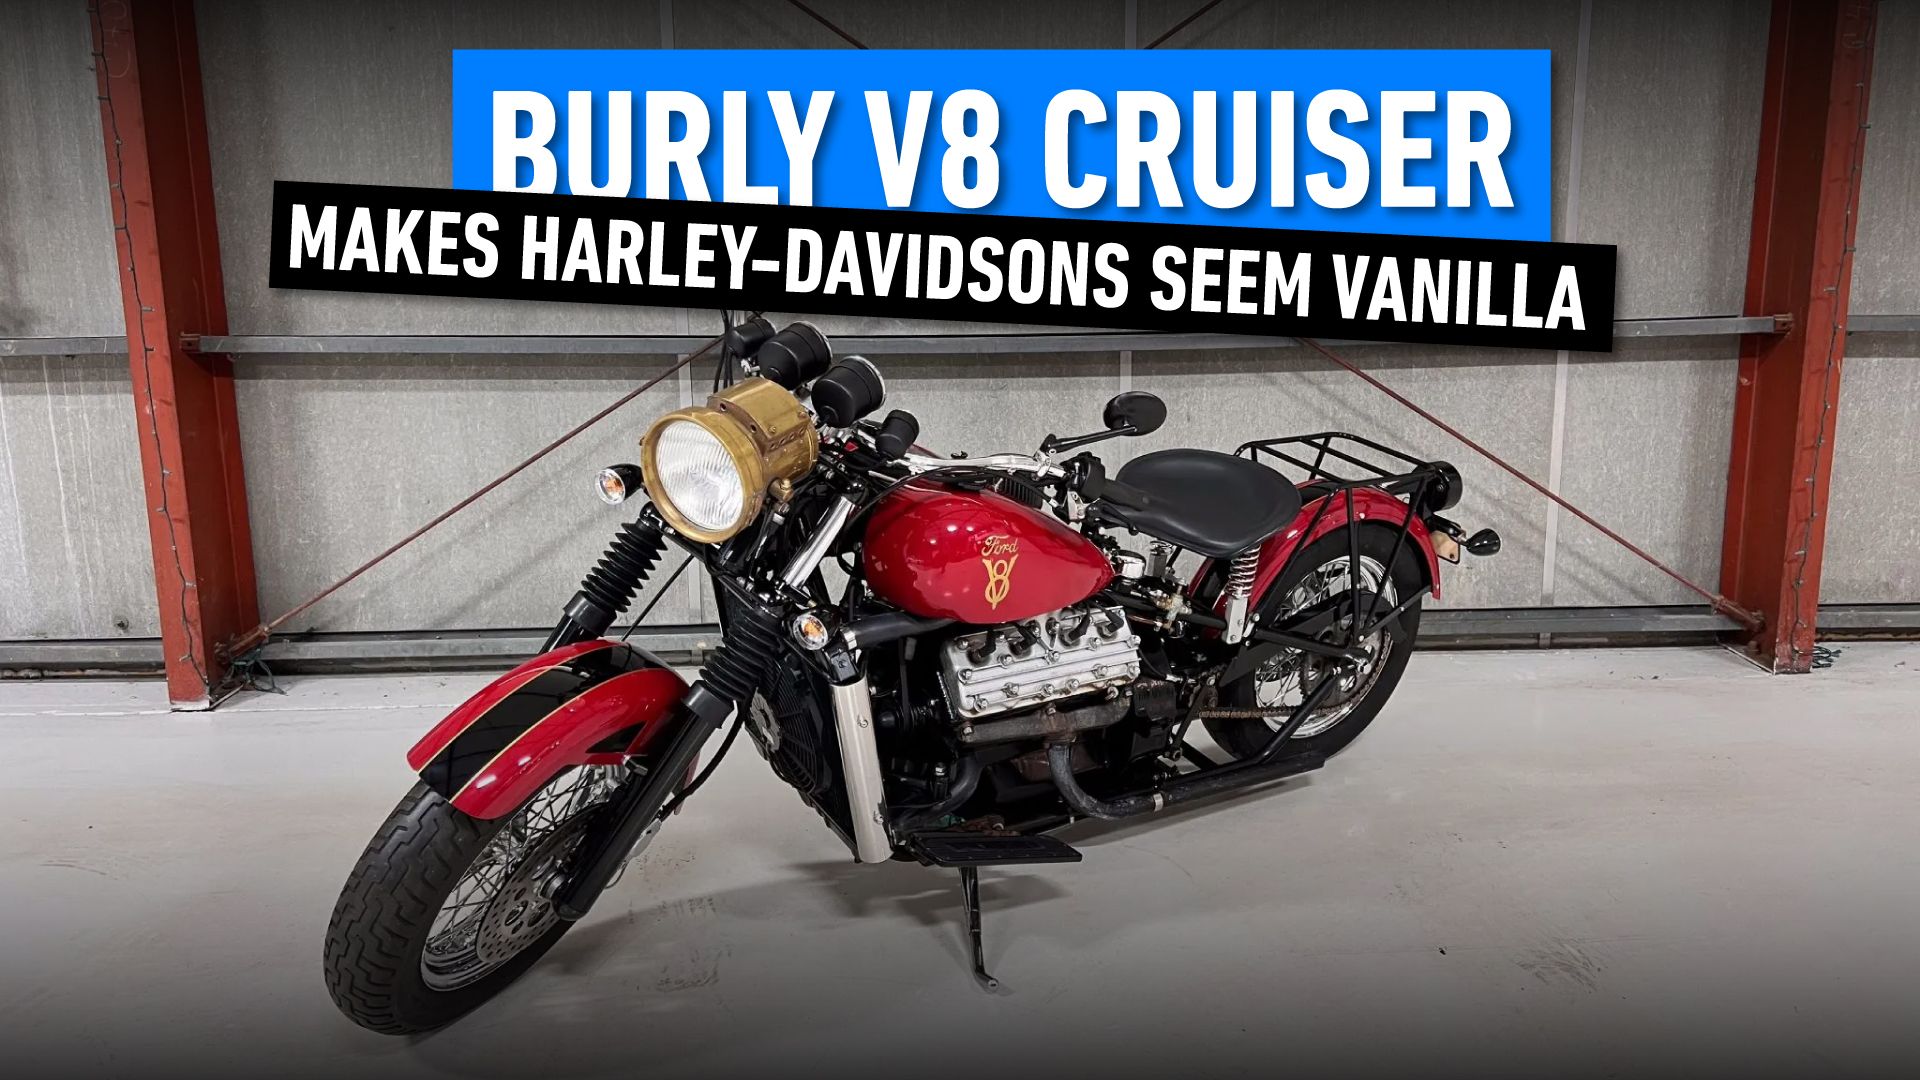 Burly-V8-Cruiser-Motorcycle-That-Can-Make-Harley-Davidsons-Seem-Vanilla